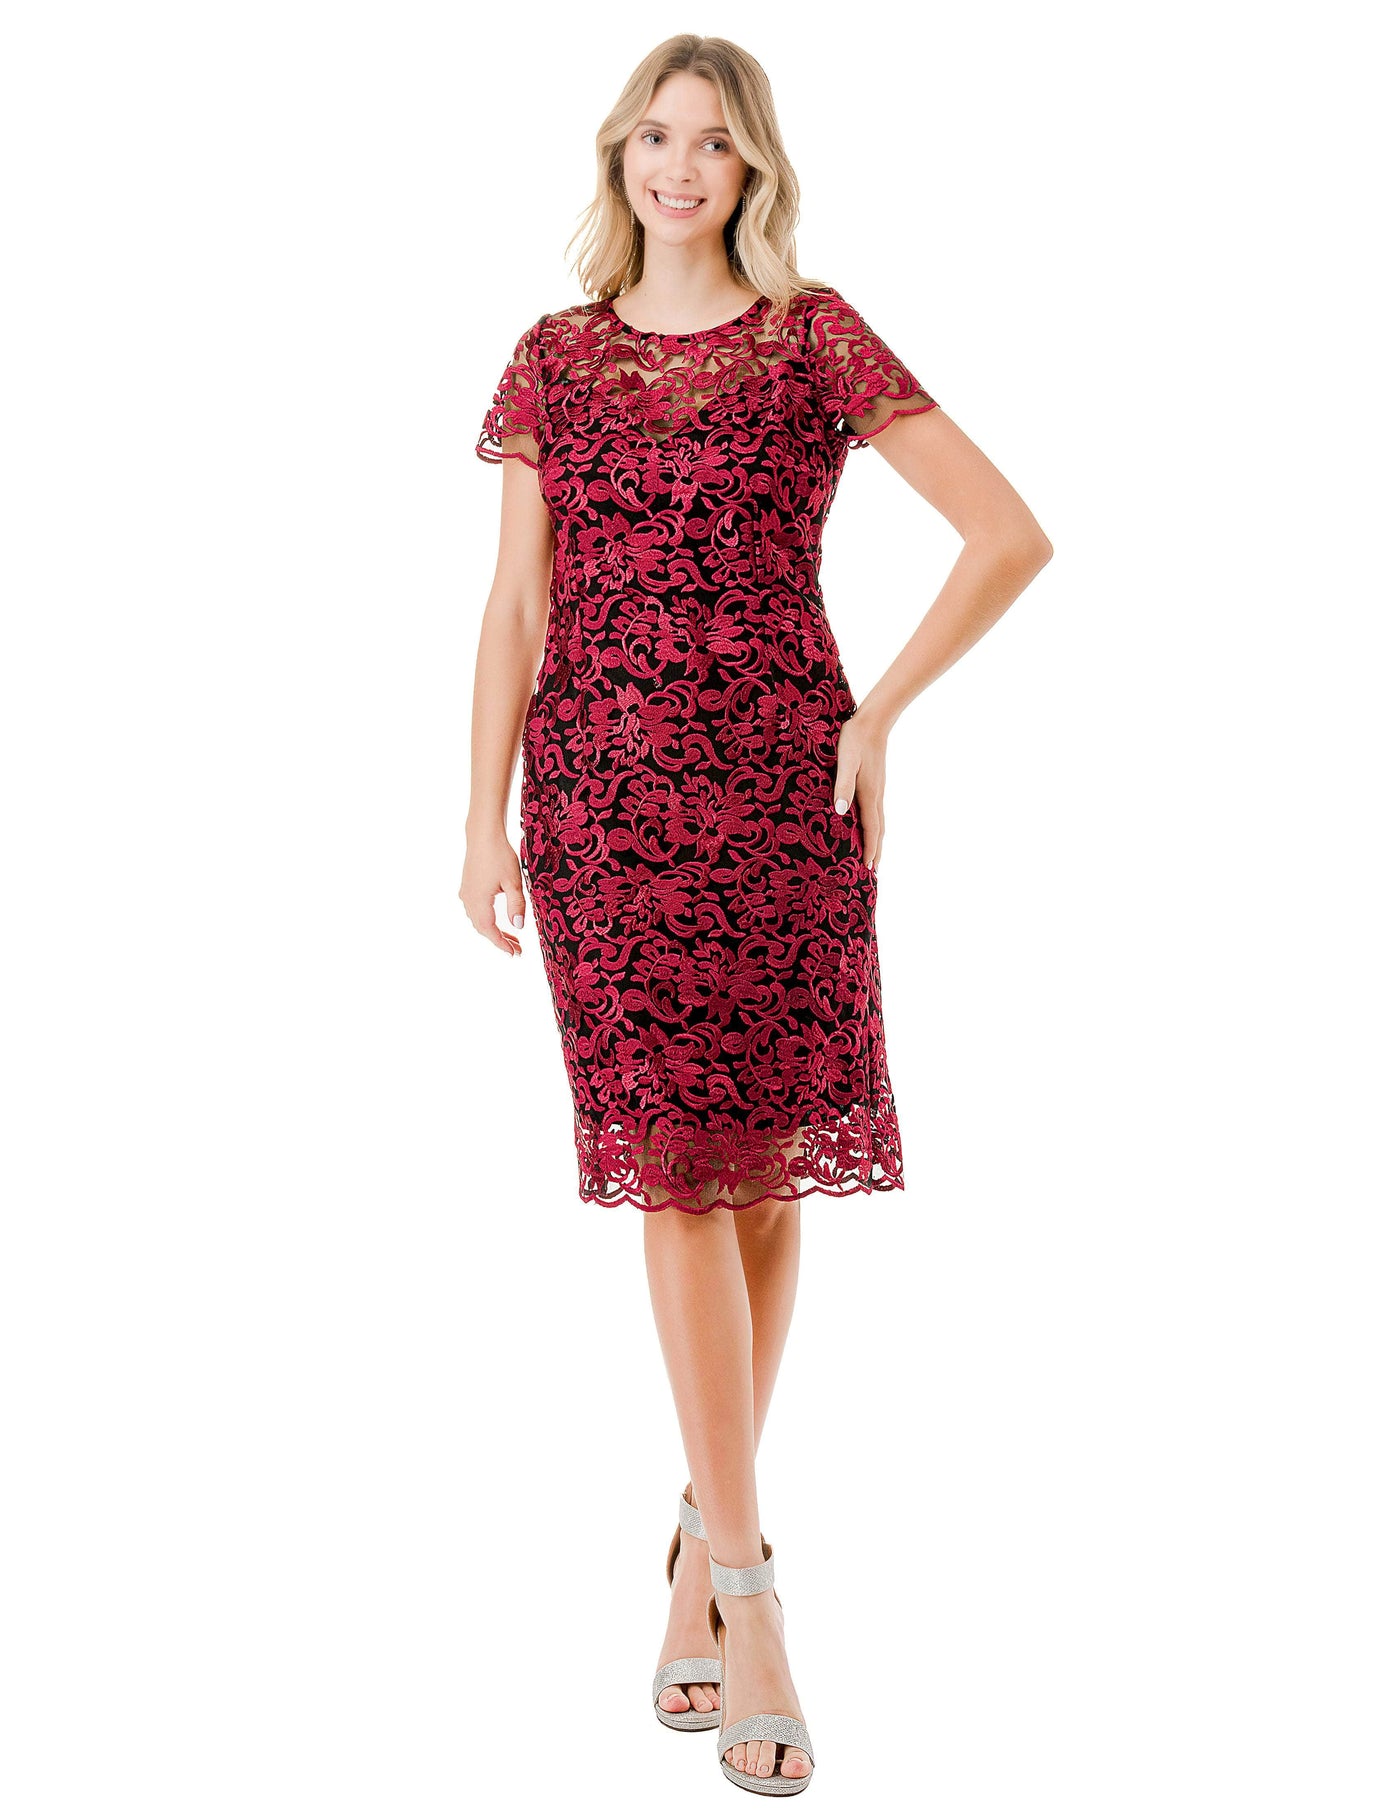 Aspeed Design D713 - Illusion Jewel Knee Length Formal Dress Special Occasion Dress XXS / Bk-Burgund